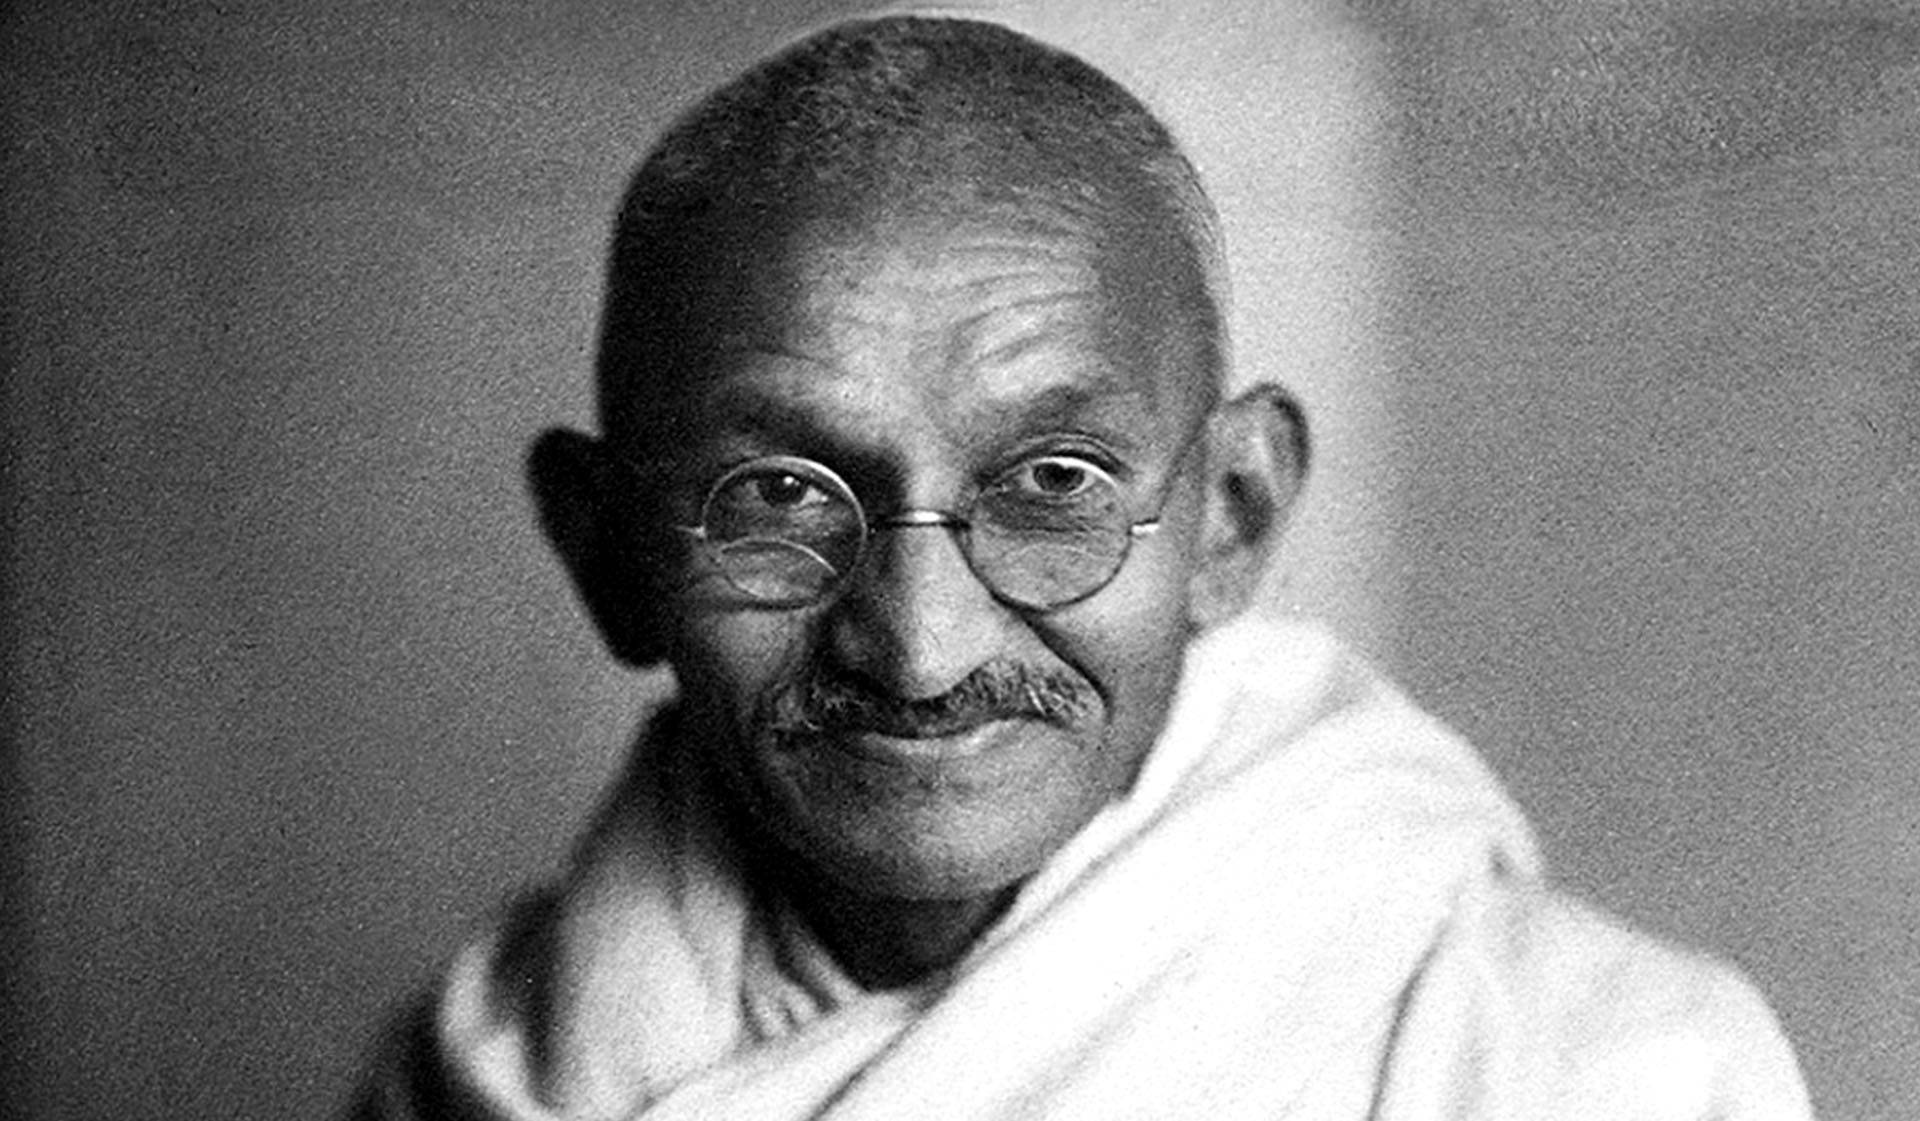 Mahatma Gandhi Old Photograph Wallpaper